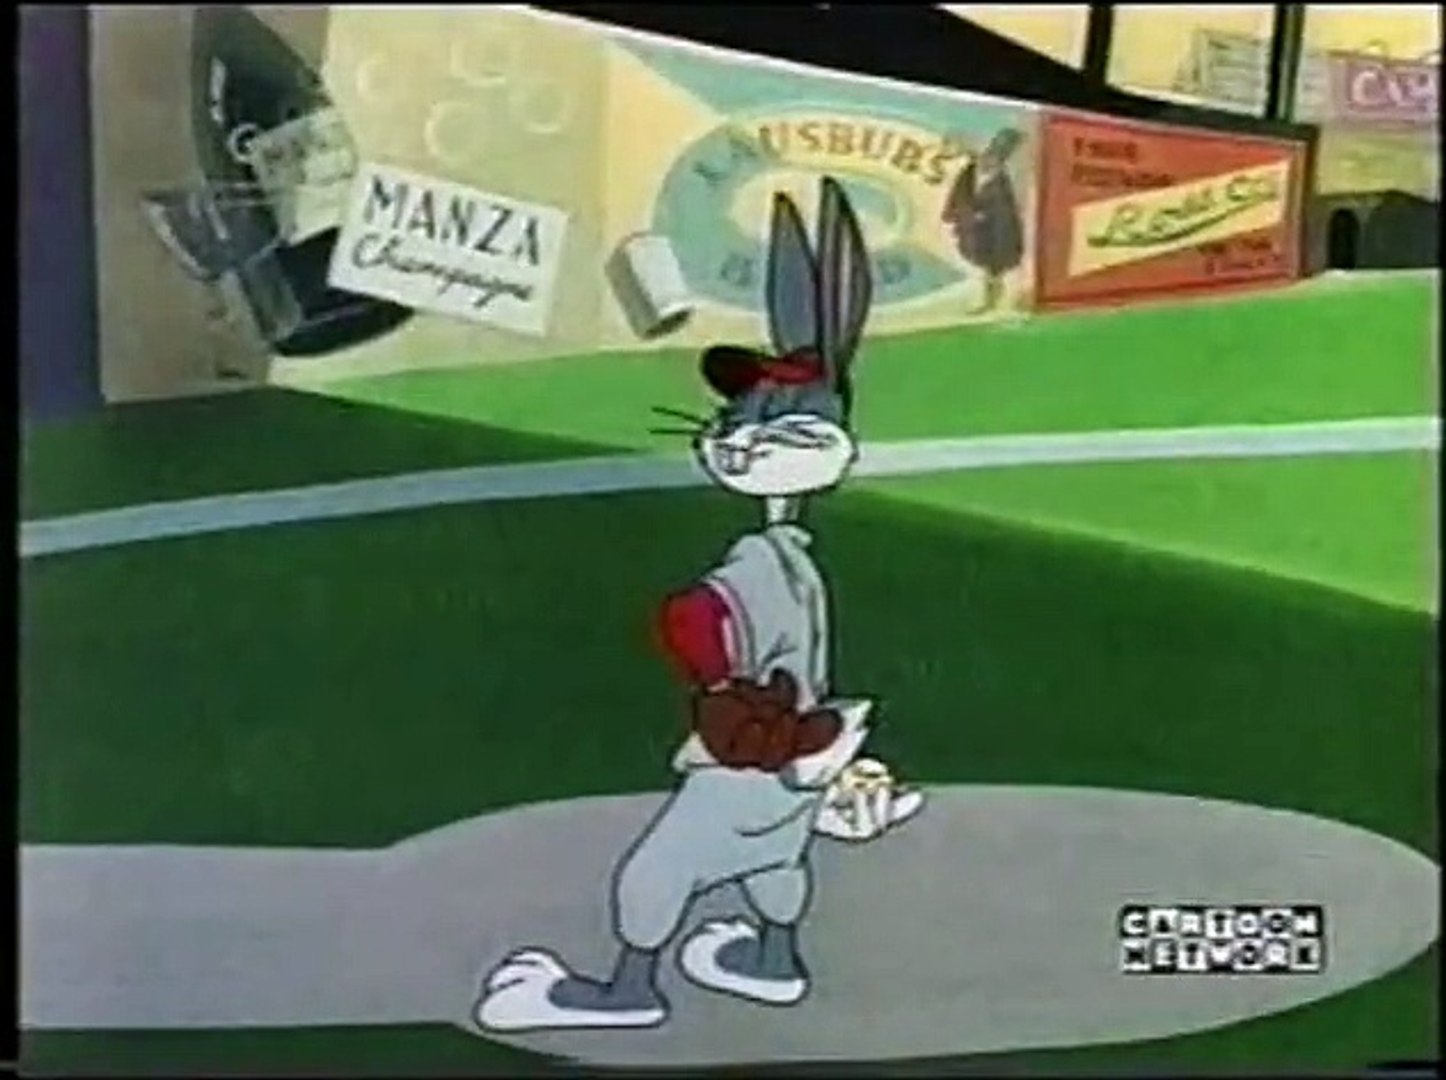 His Hare-Raising Tale (1951)